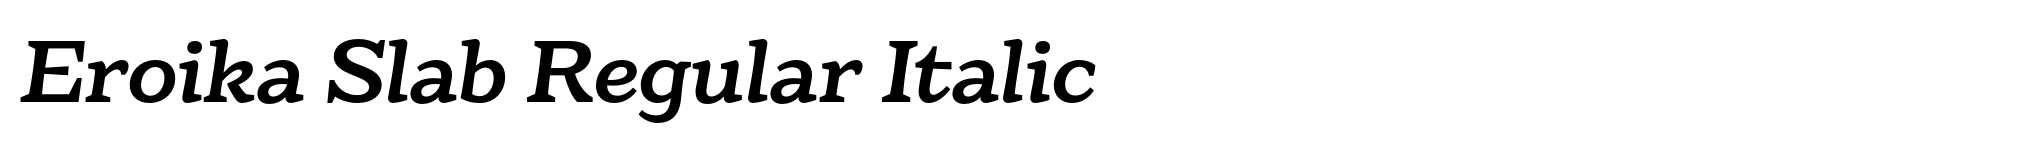 Eroika Slab Regular Italic image